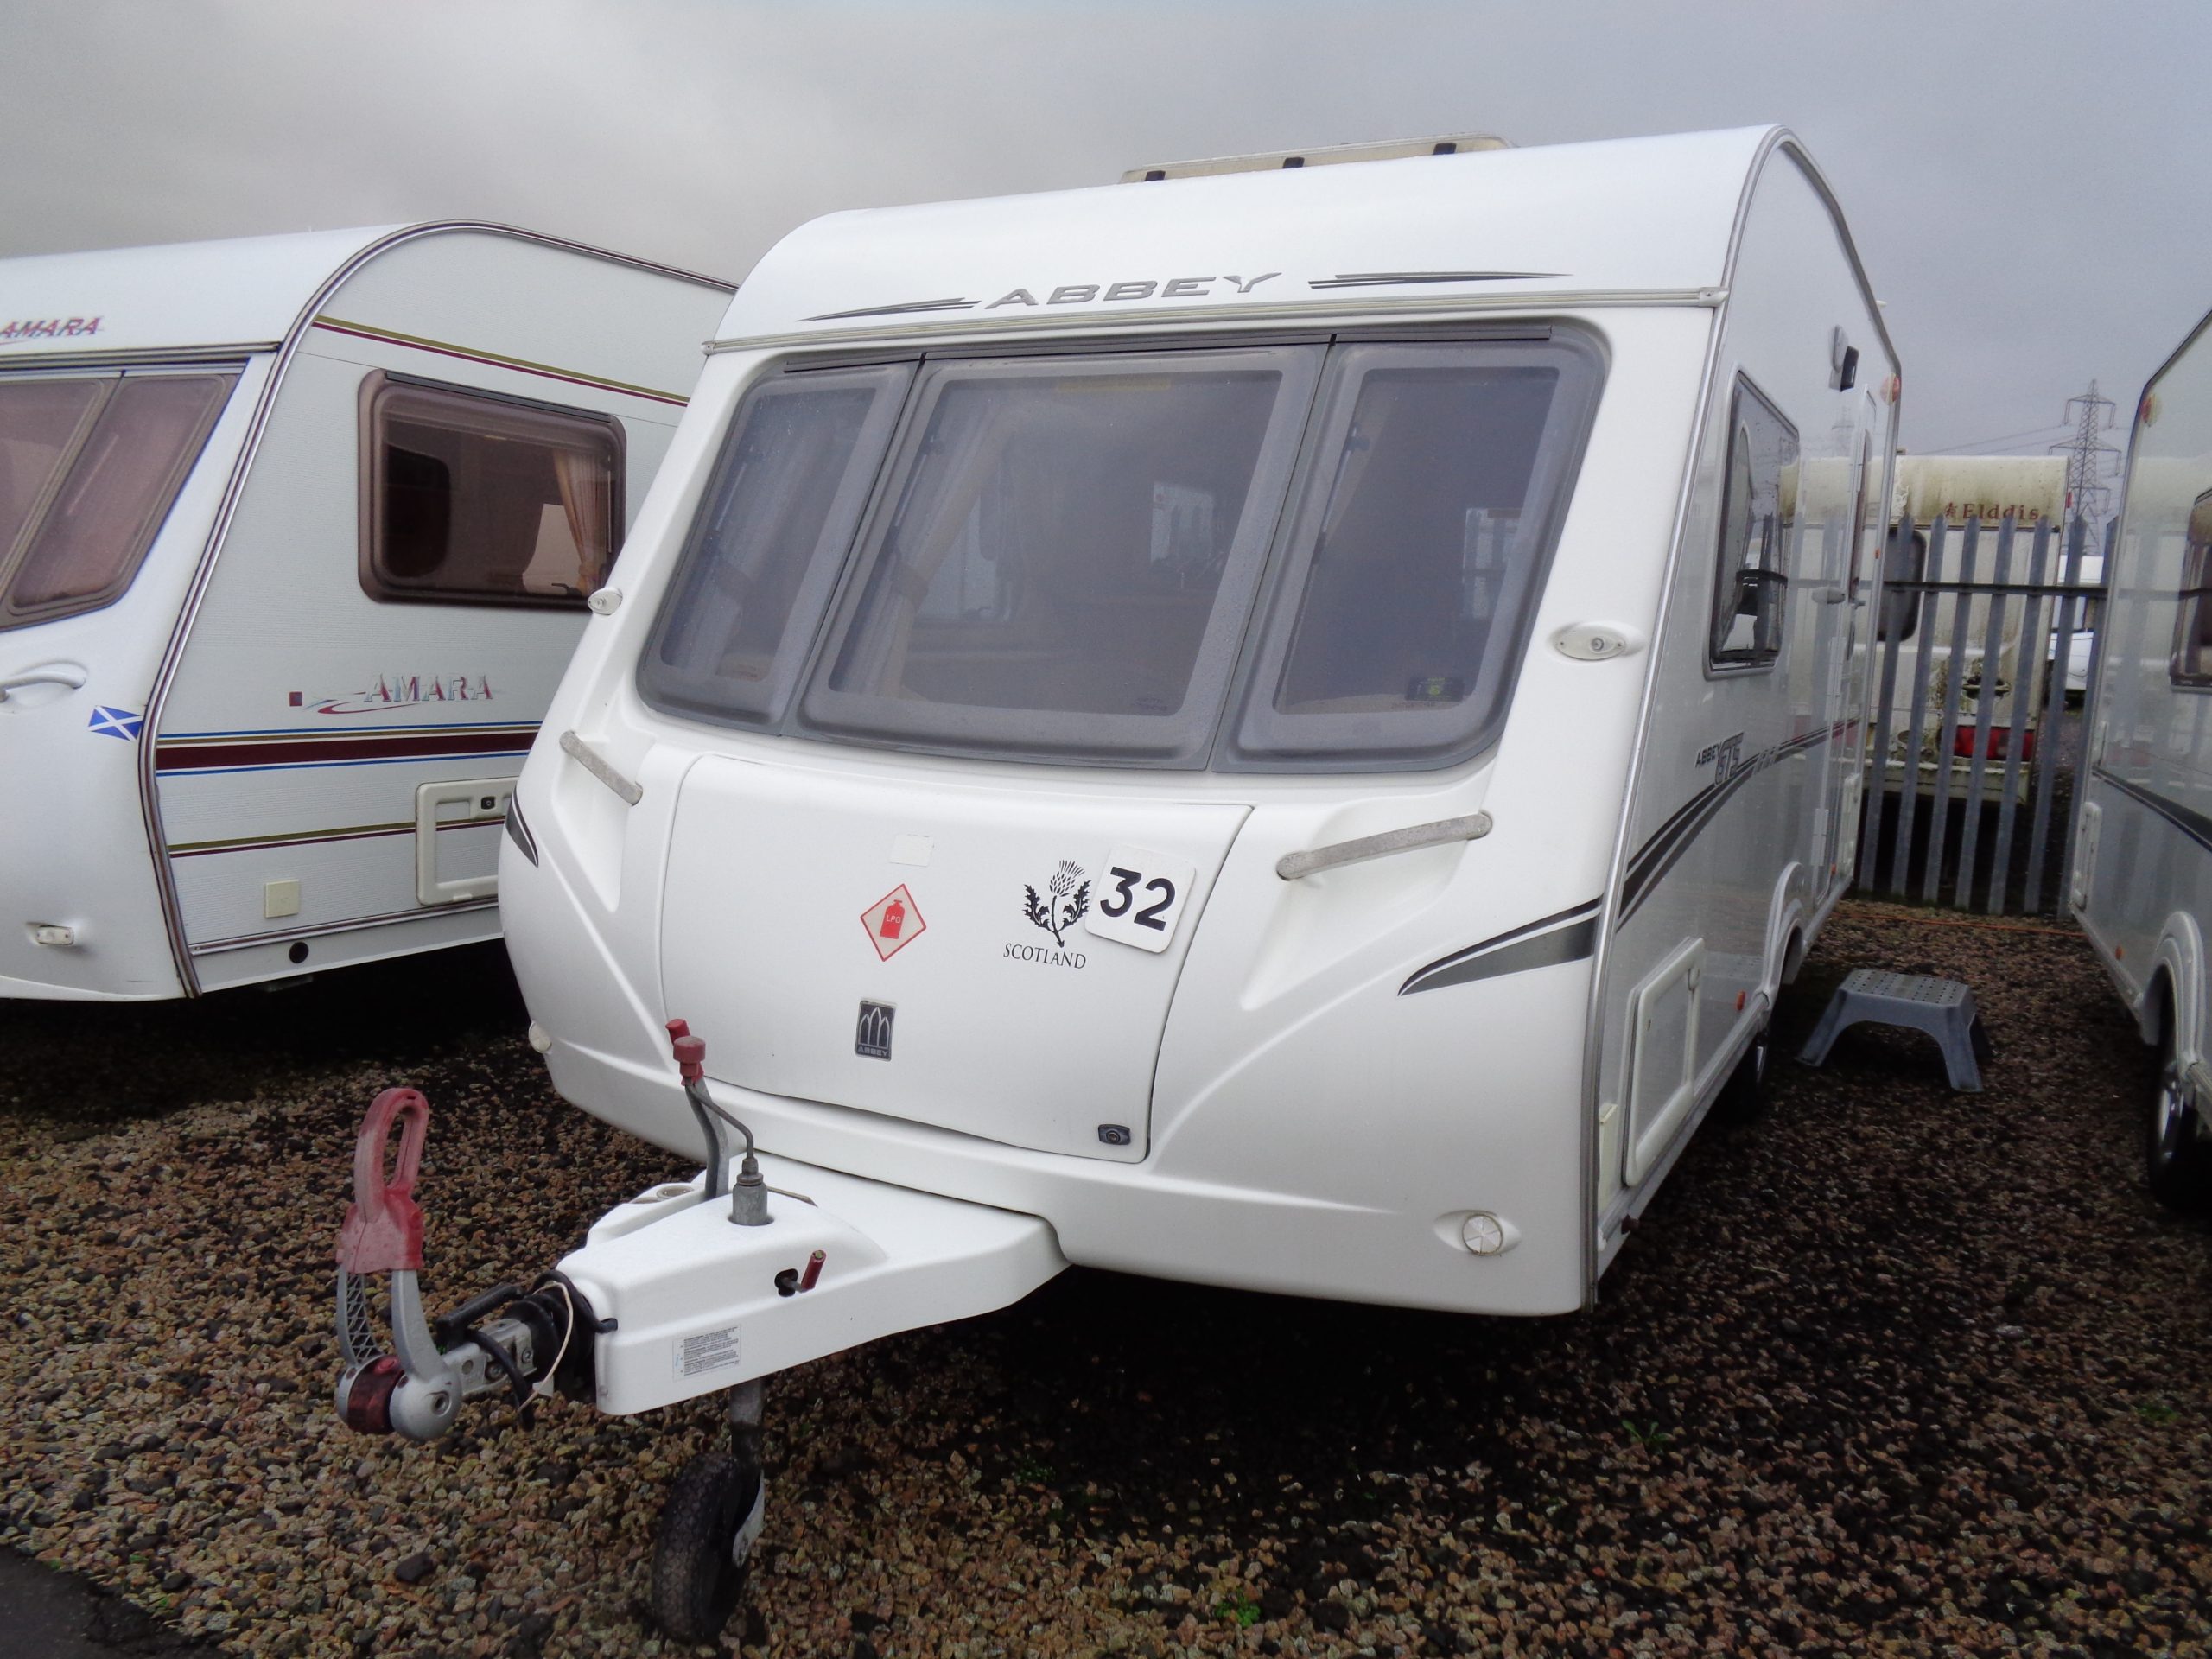 Caravan No. 32 – 2007 Abbey GTS 215, 2 berth £8,500